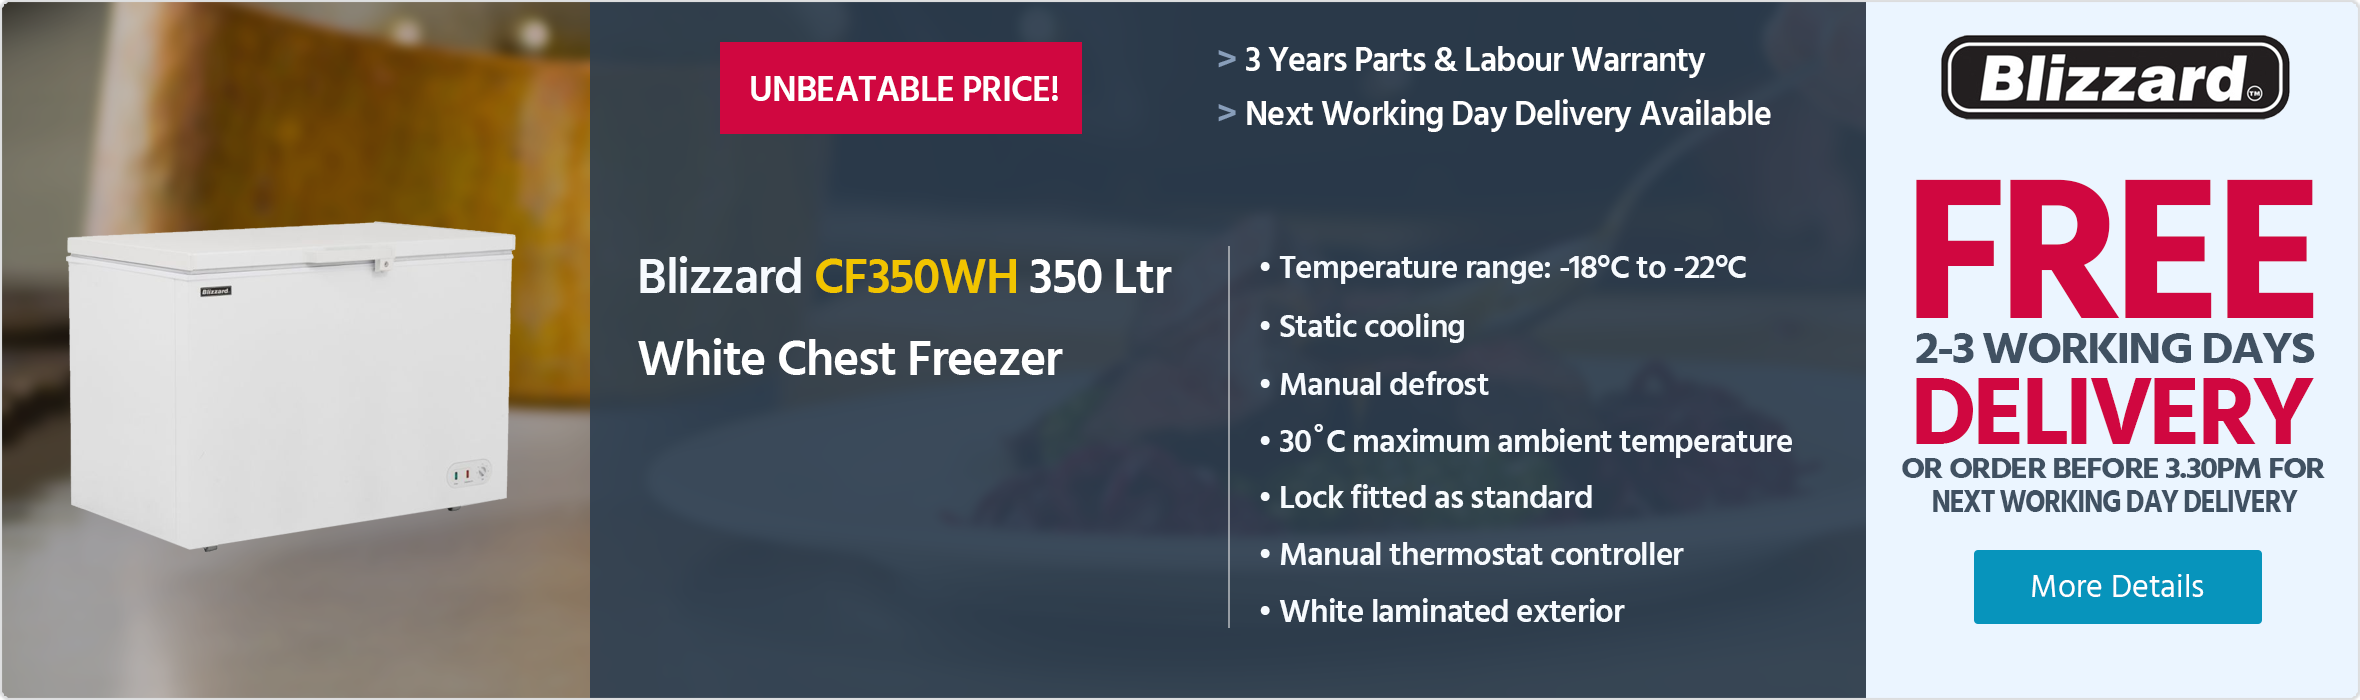 Blizzard CF350WH 350 Ltr White Chest Freezer